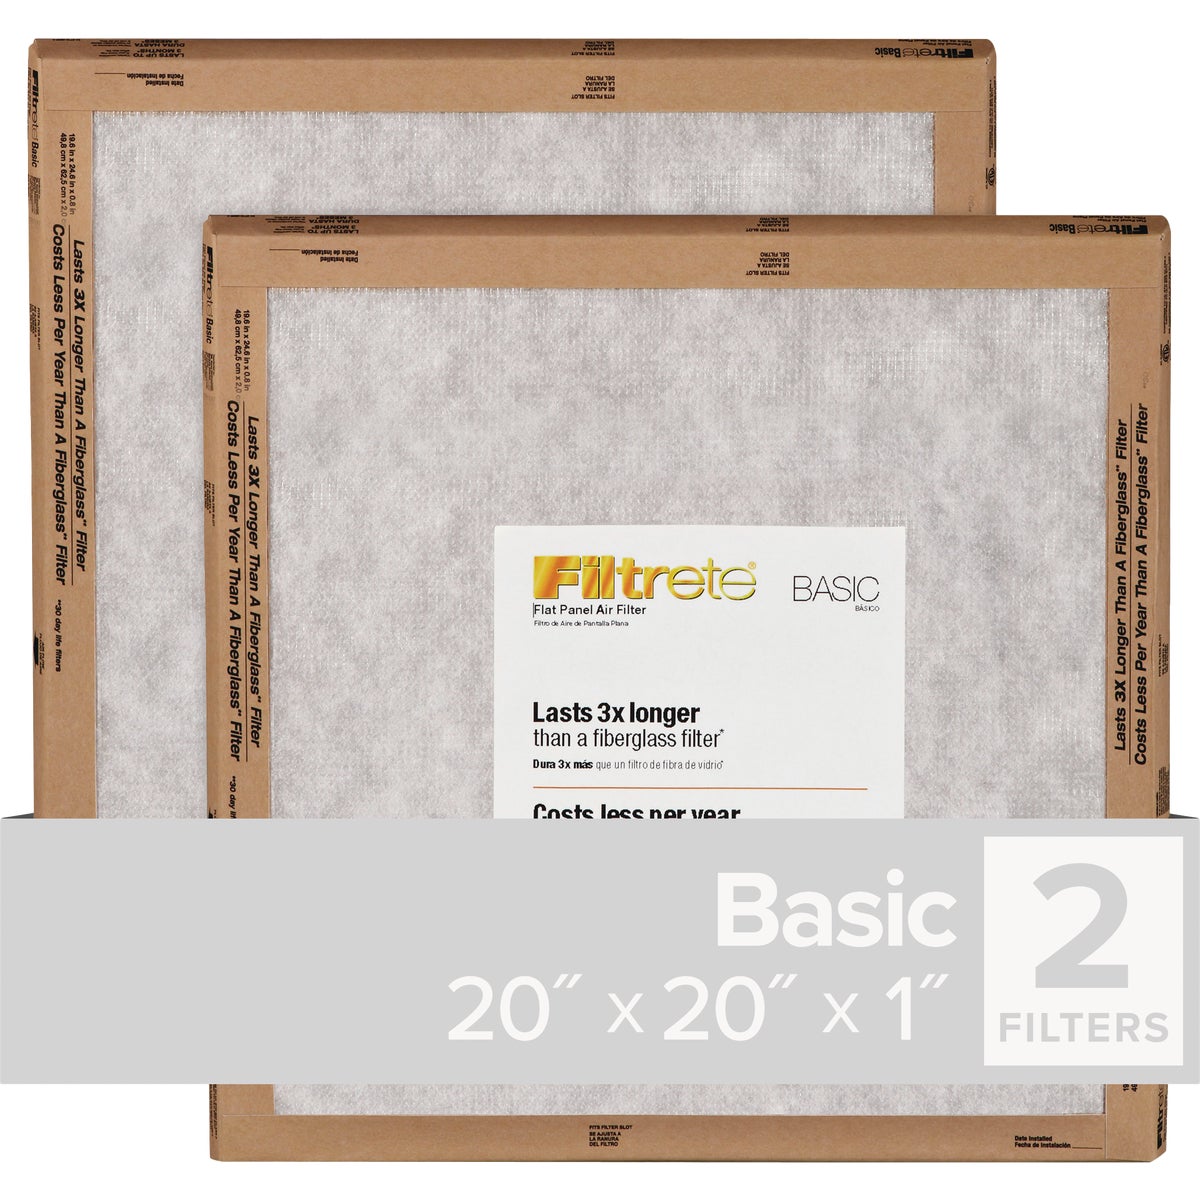 3M FPL02-2PK-24 3M Filtrete 20 In. x 20 In. x 1 In. Basic MPR Flat Panel Furnance Filter, (2-Pack) FPL02-2PK-24 Pack of 24